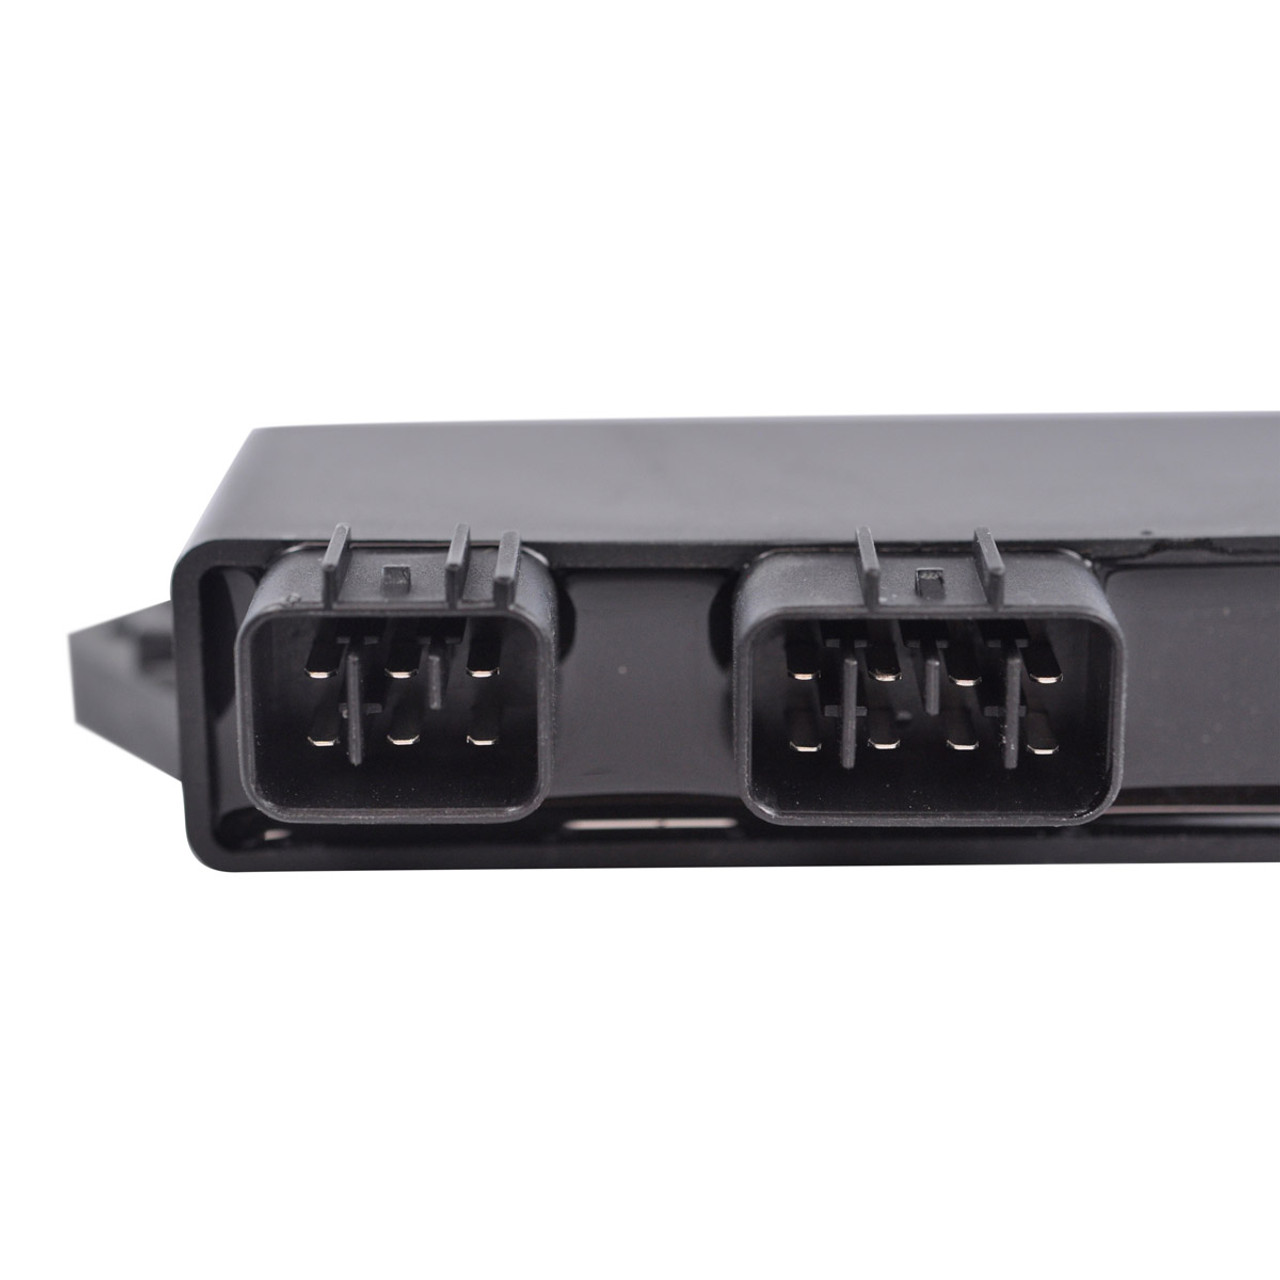 RMSTATOR New Aftermarket Yamaha Kit Stator + Regulator Rectifier + High Performance CDI Box + External Ignition Coil, RM23012